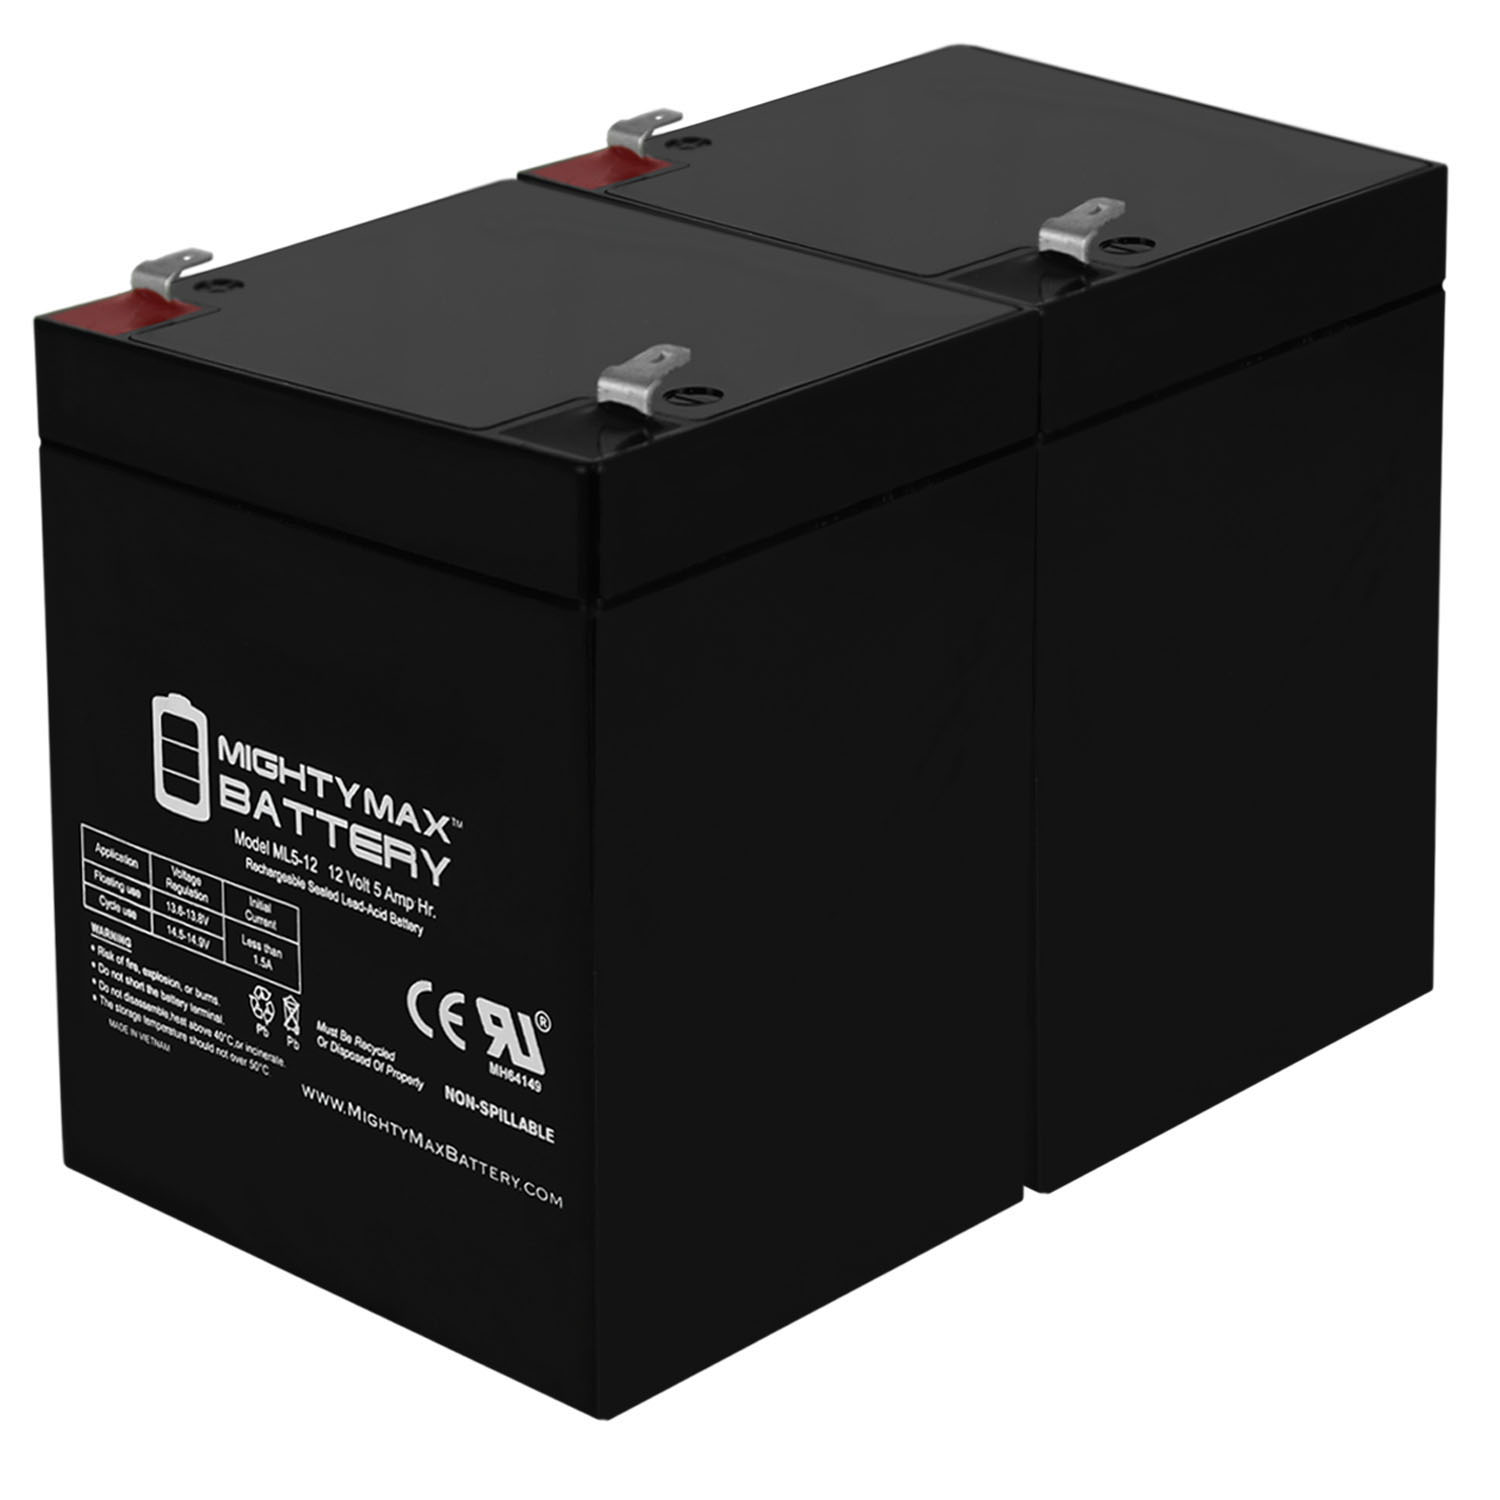 12V 5AH SLA Replacement Battery for Razor E150 Red 13111601 - 2 Pack